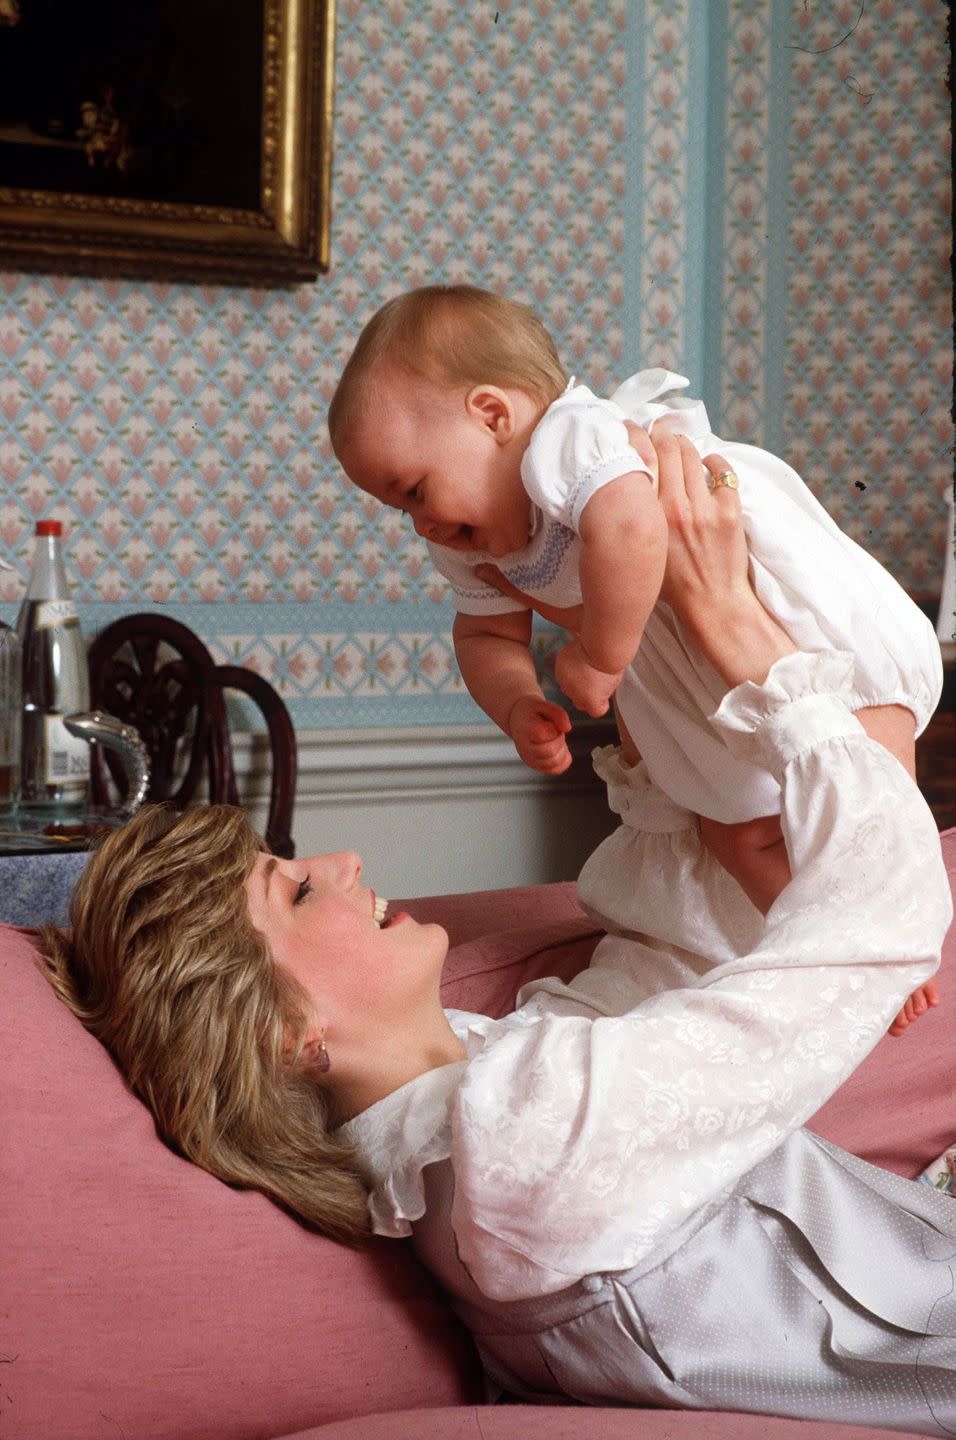 Princess Diana With Baby William